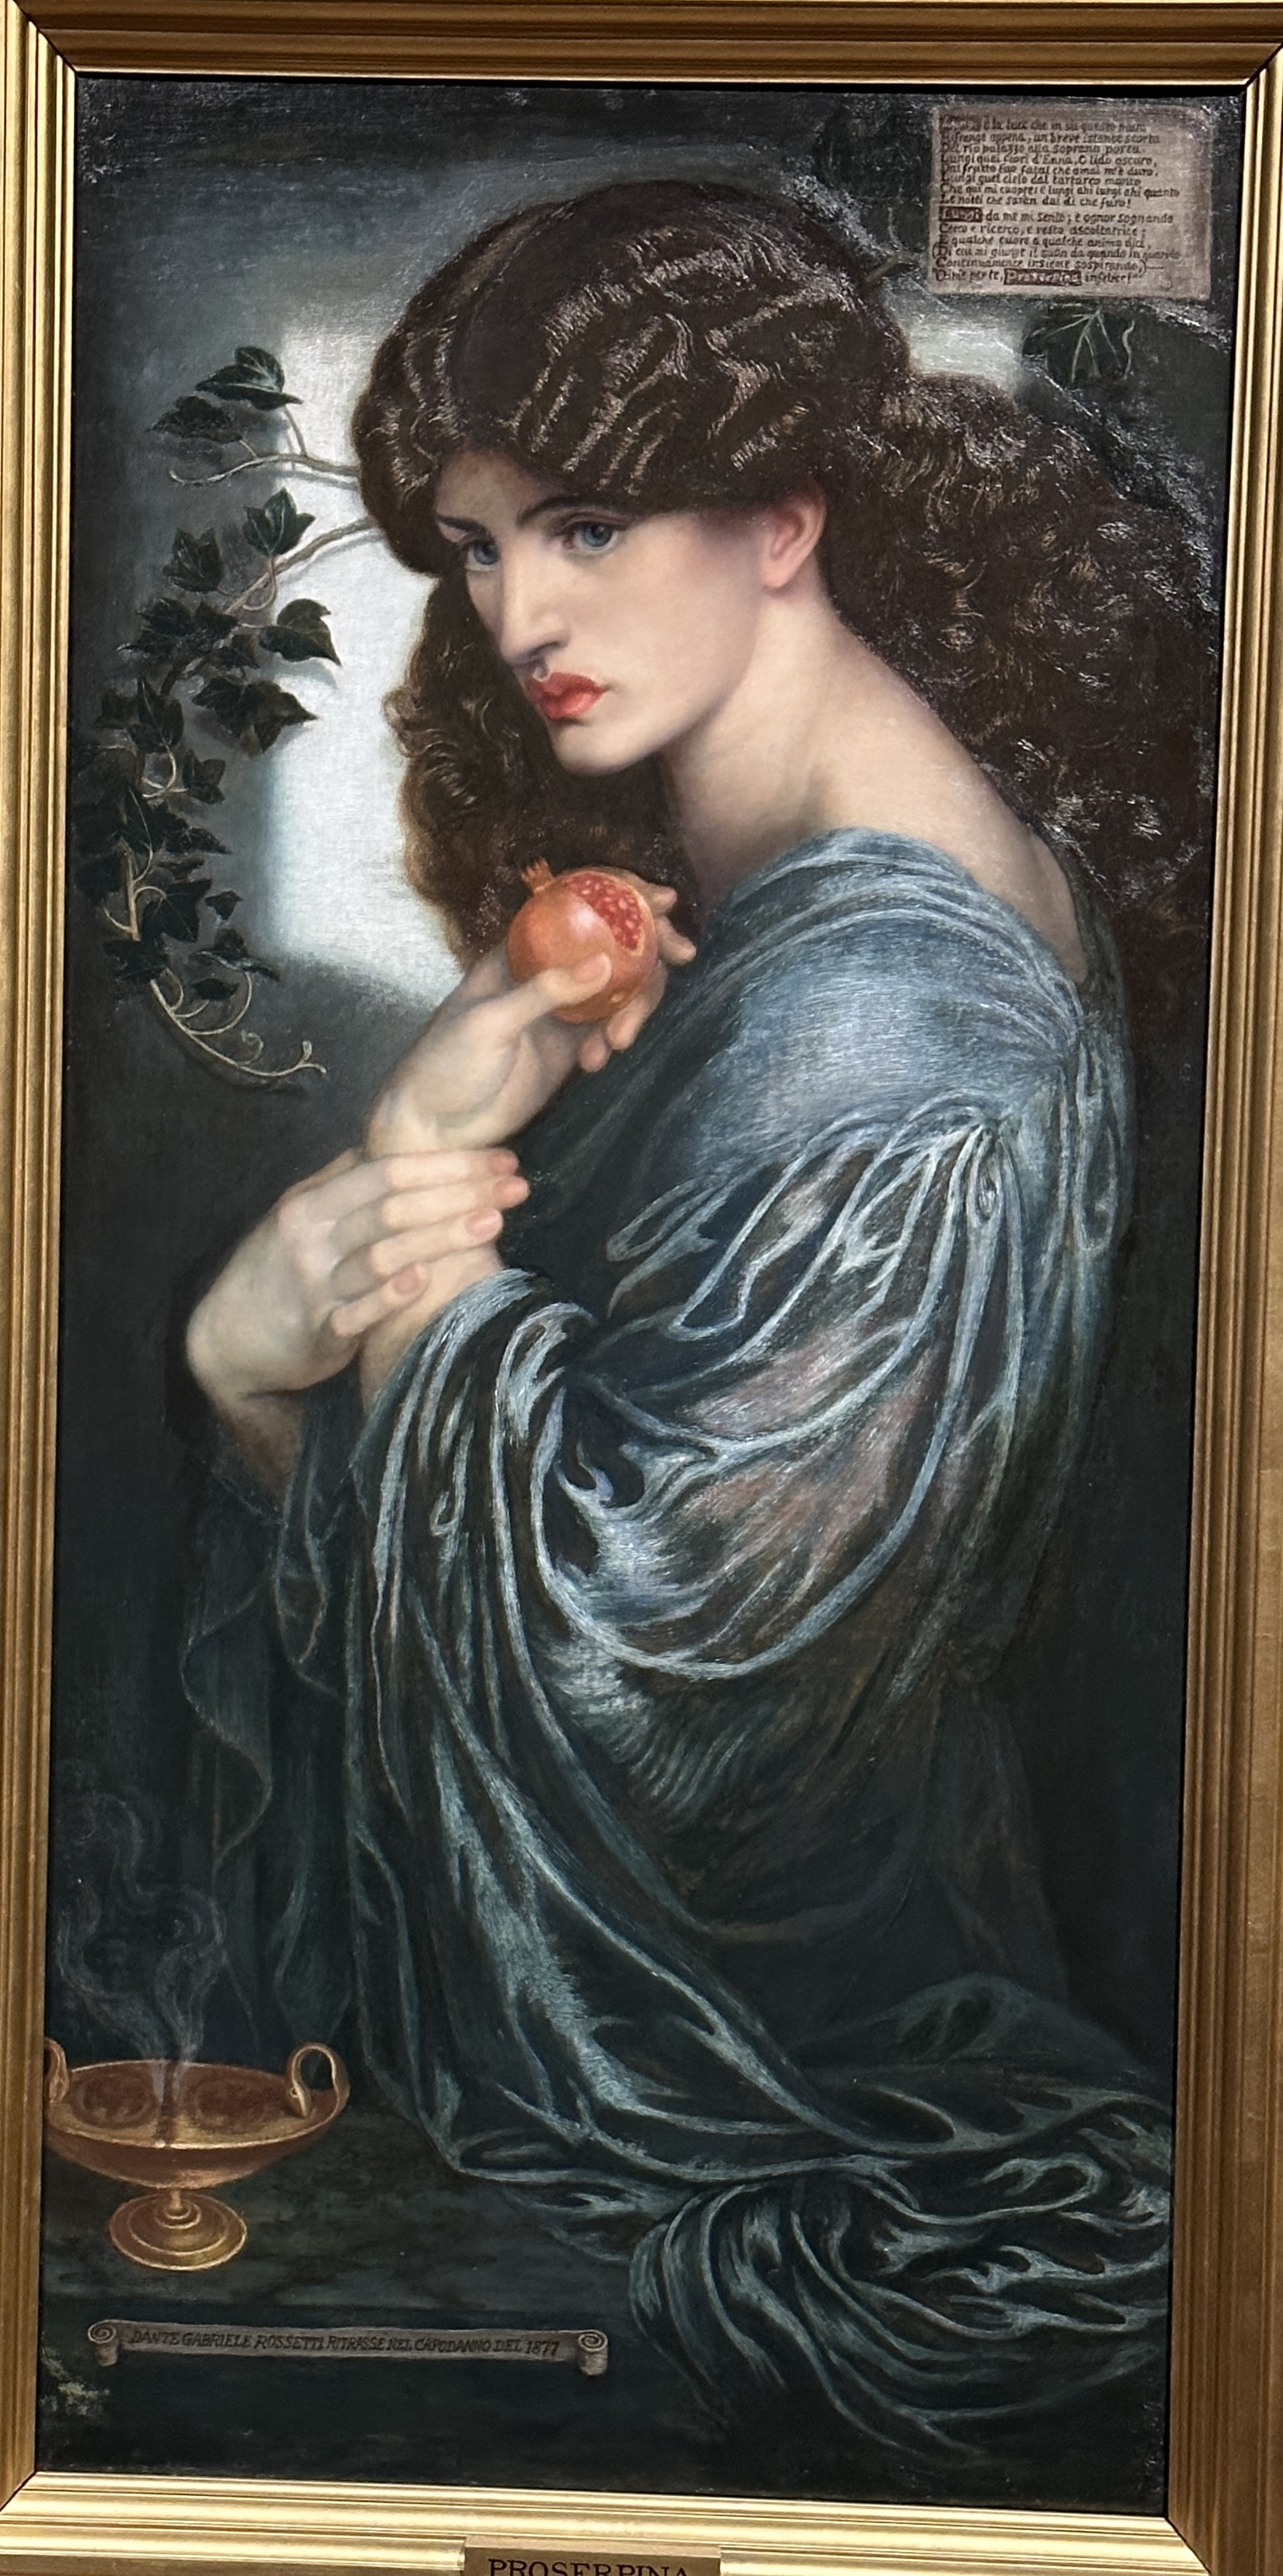 Proserphine, Dante Gabriel Rossetti, 1877